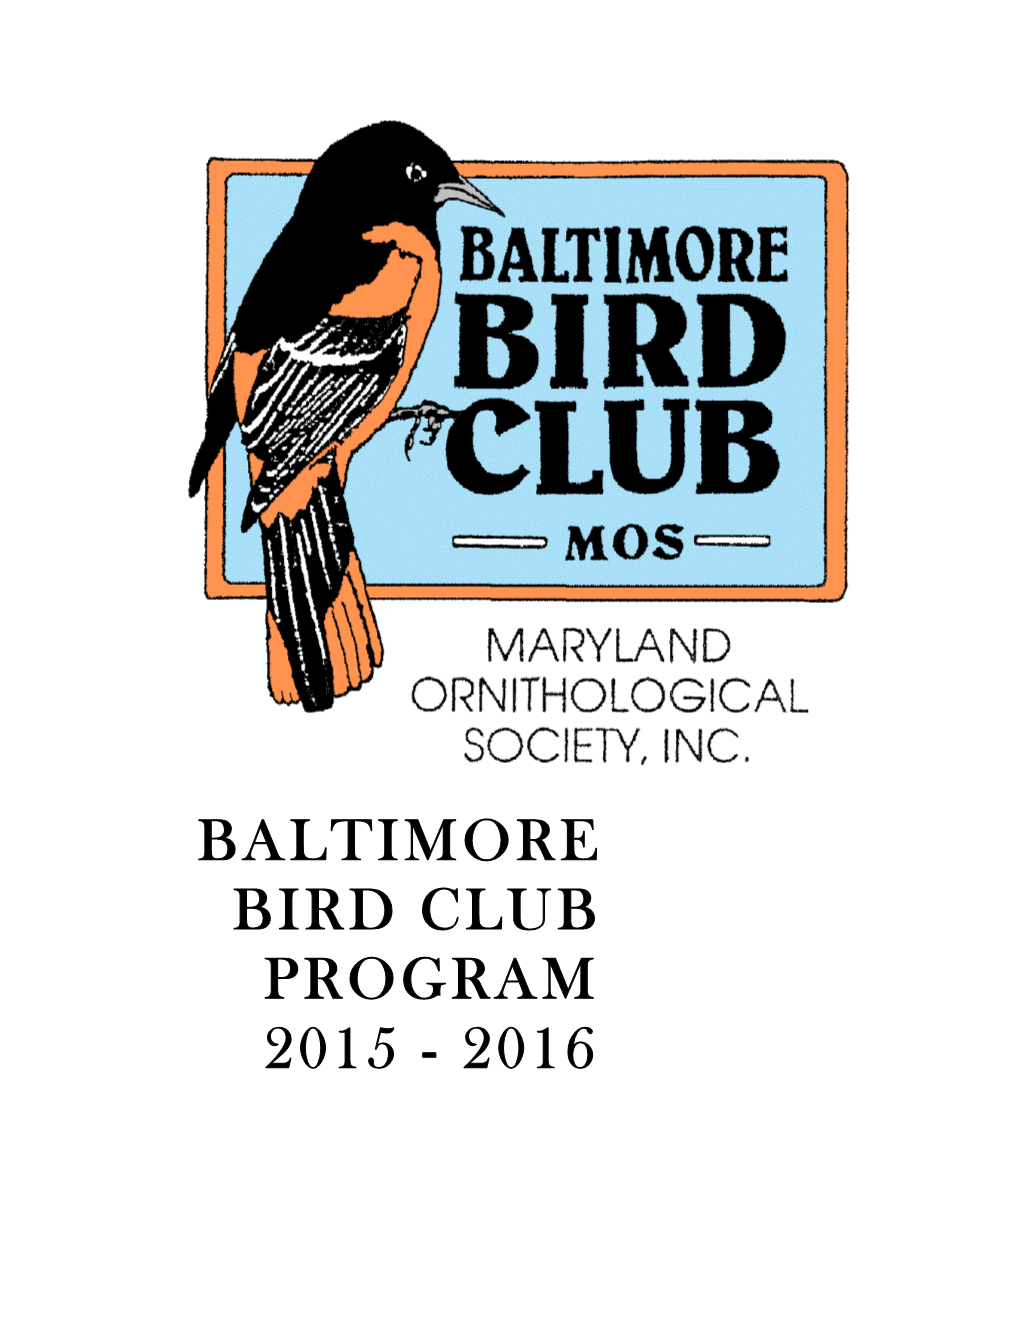 Baltimore Bird Club Program 2015 - 2016